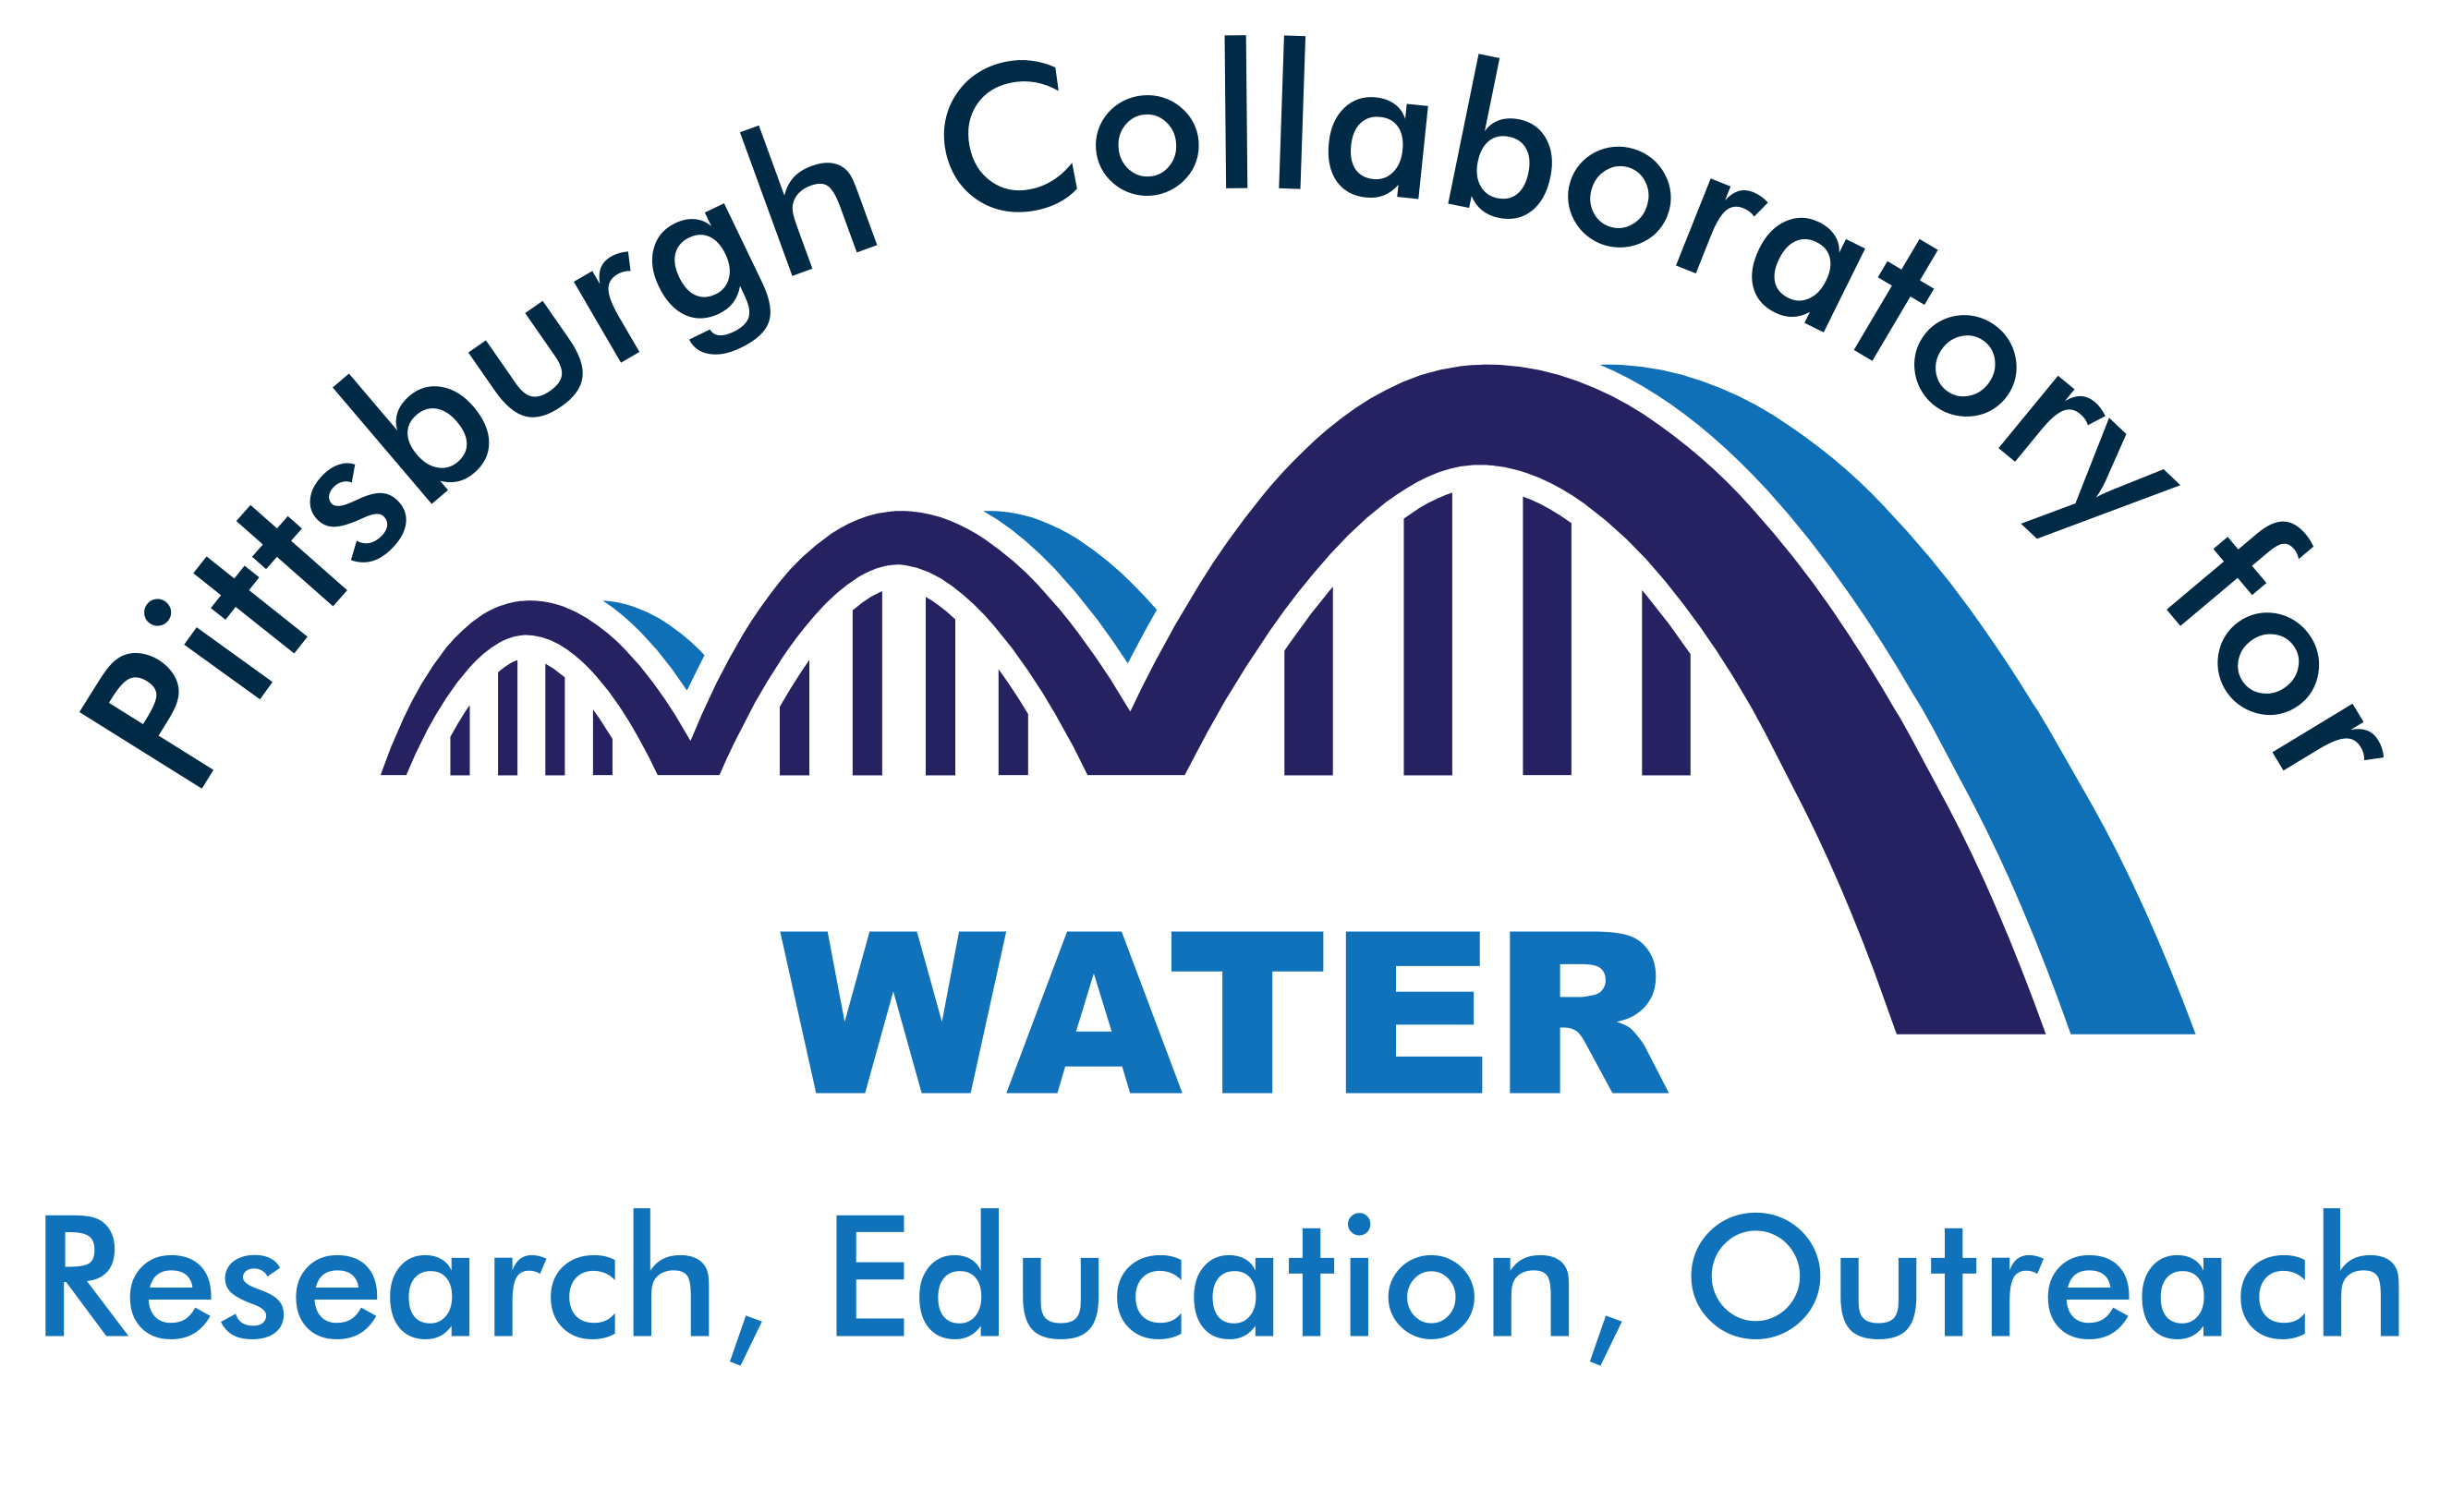 Collaboratory bridge logo